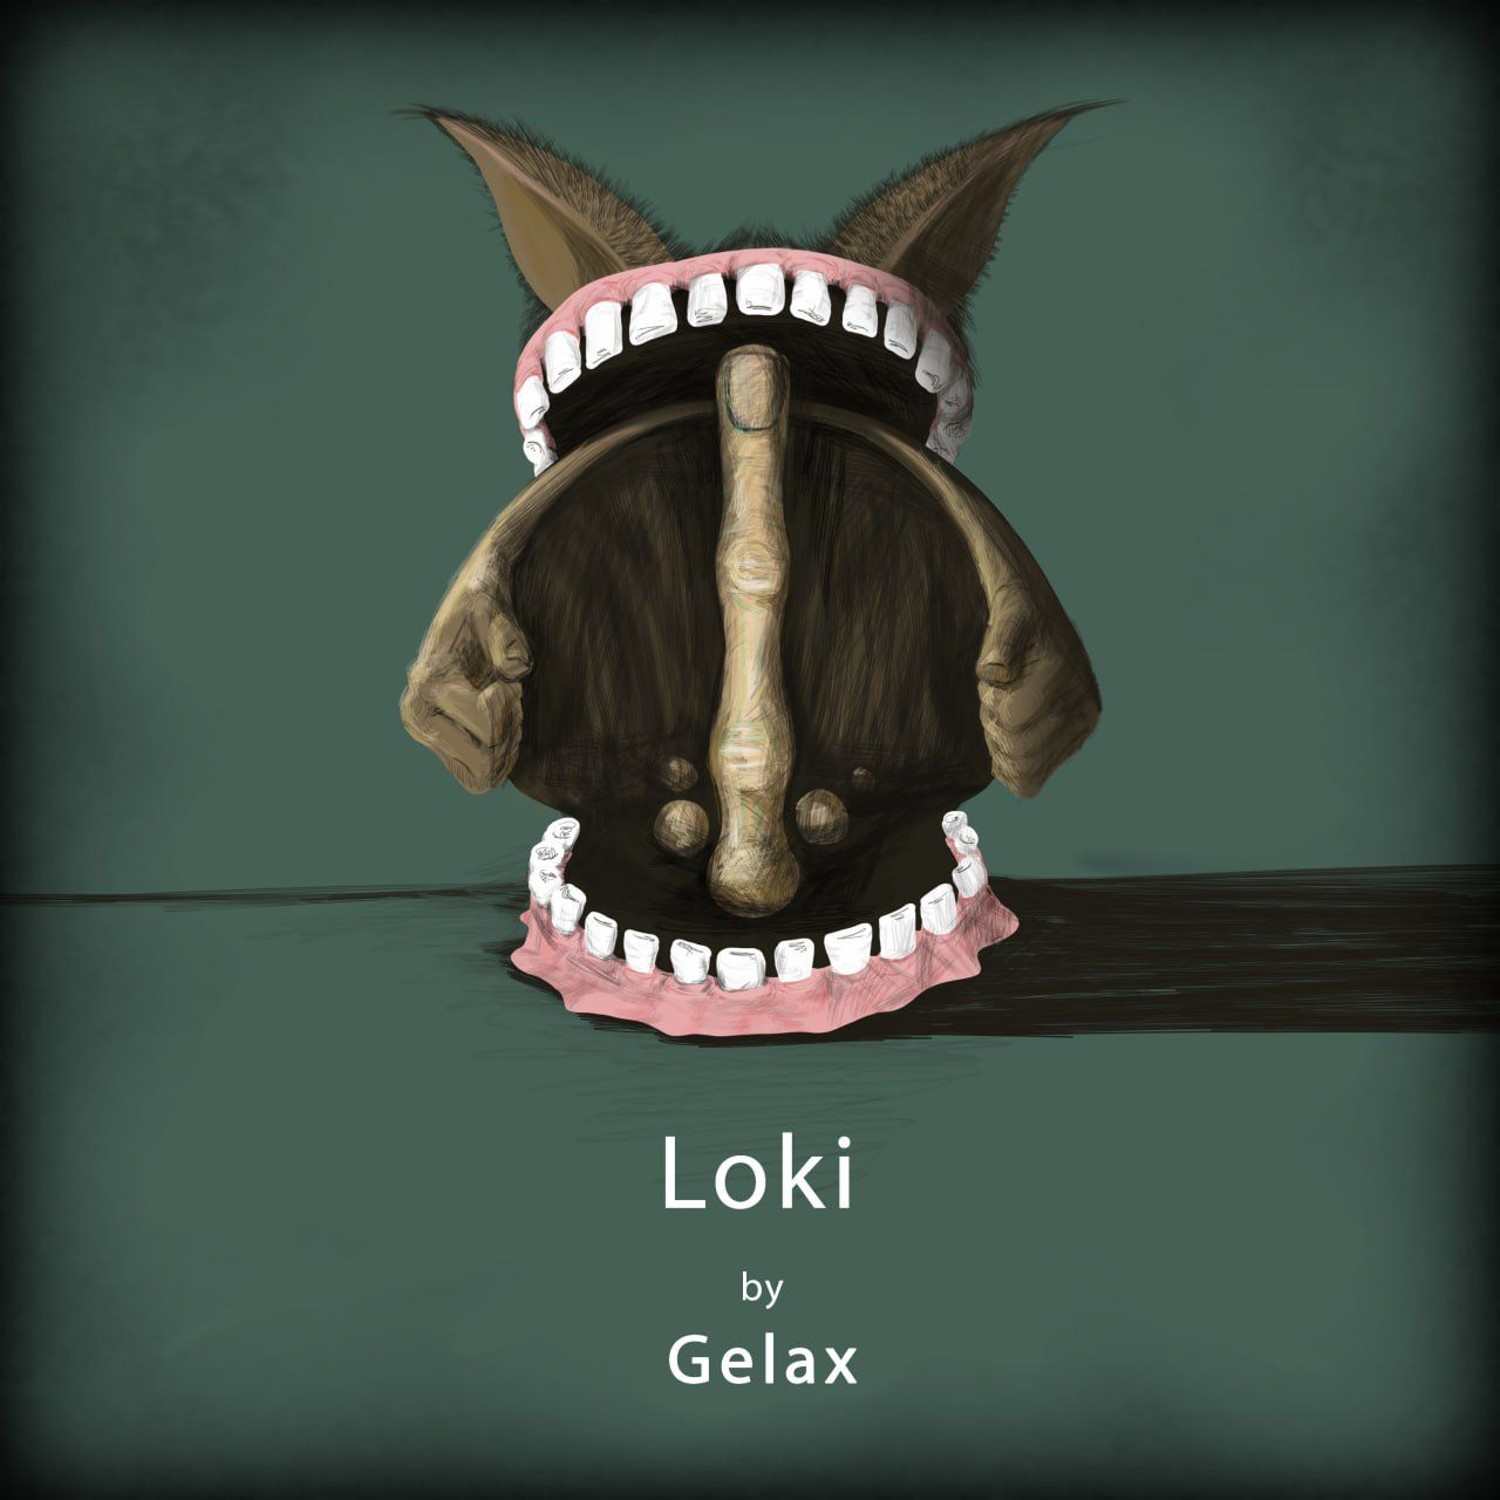 Gelax “Loki” single artwork